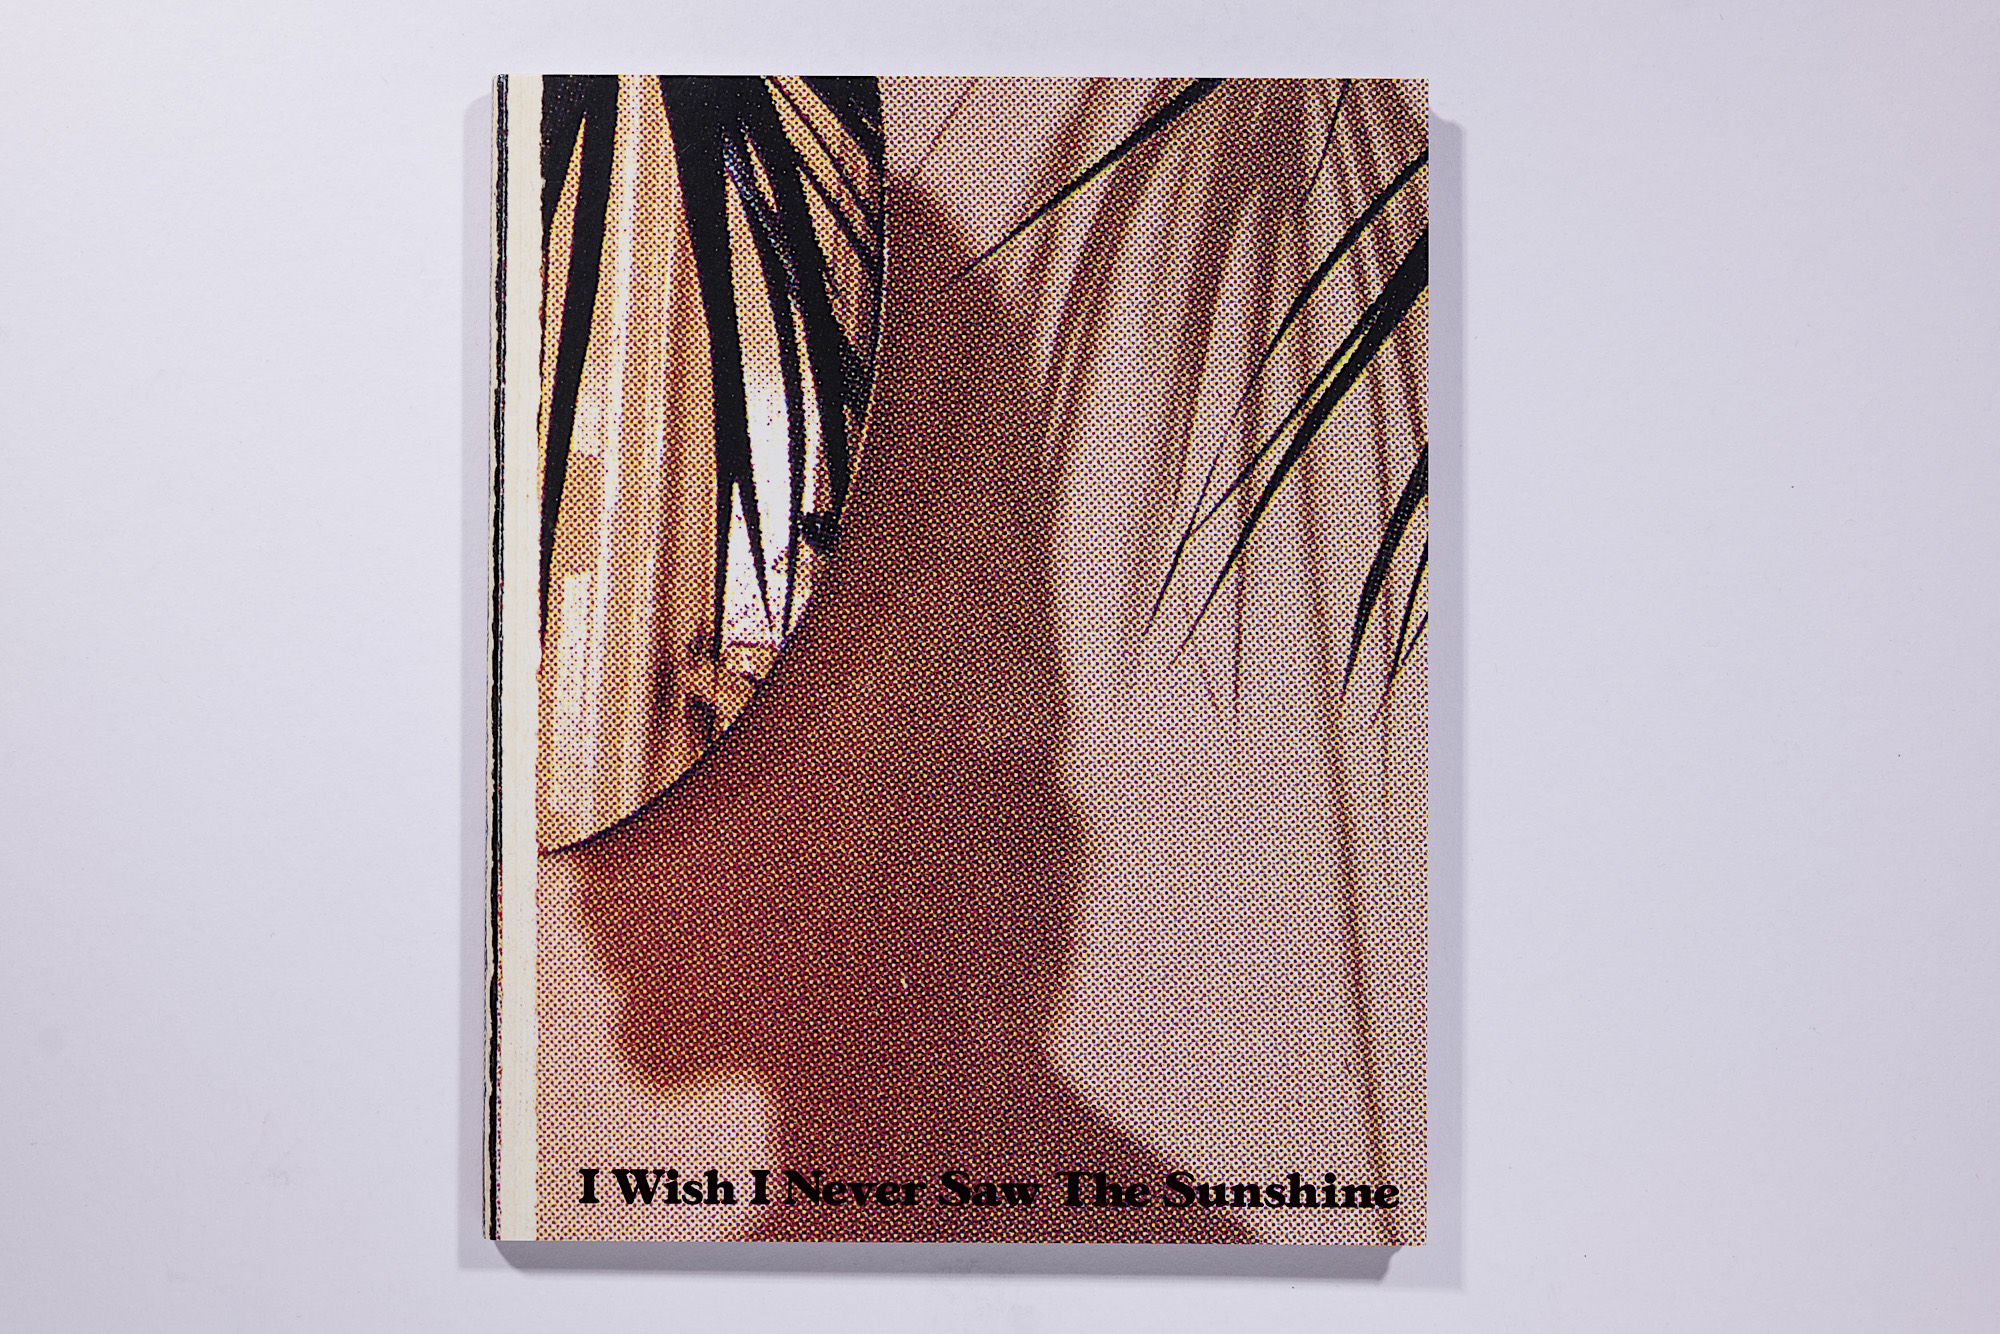 Pacifico Solano - I Wish I Never Saw the Sunshine Image 1